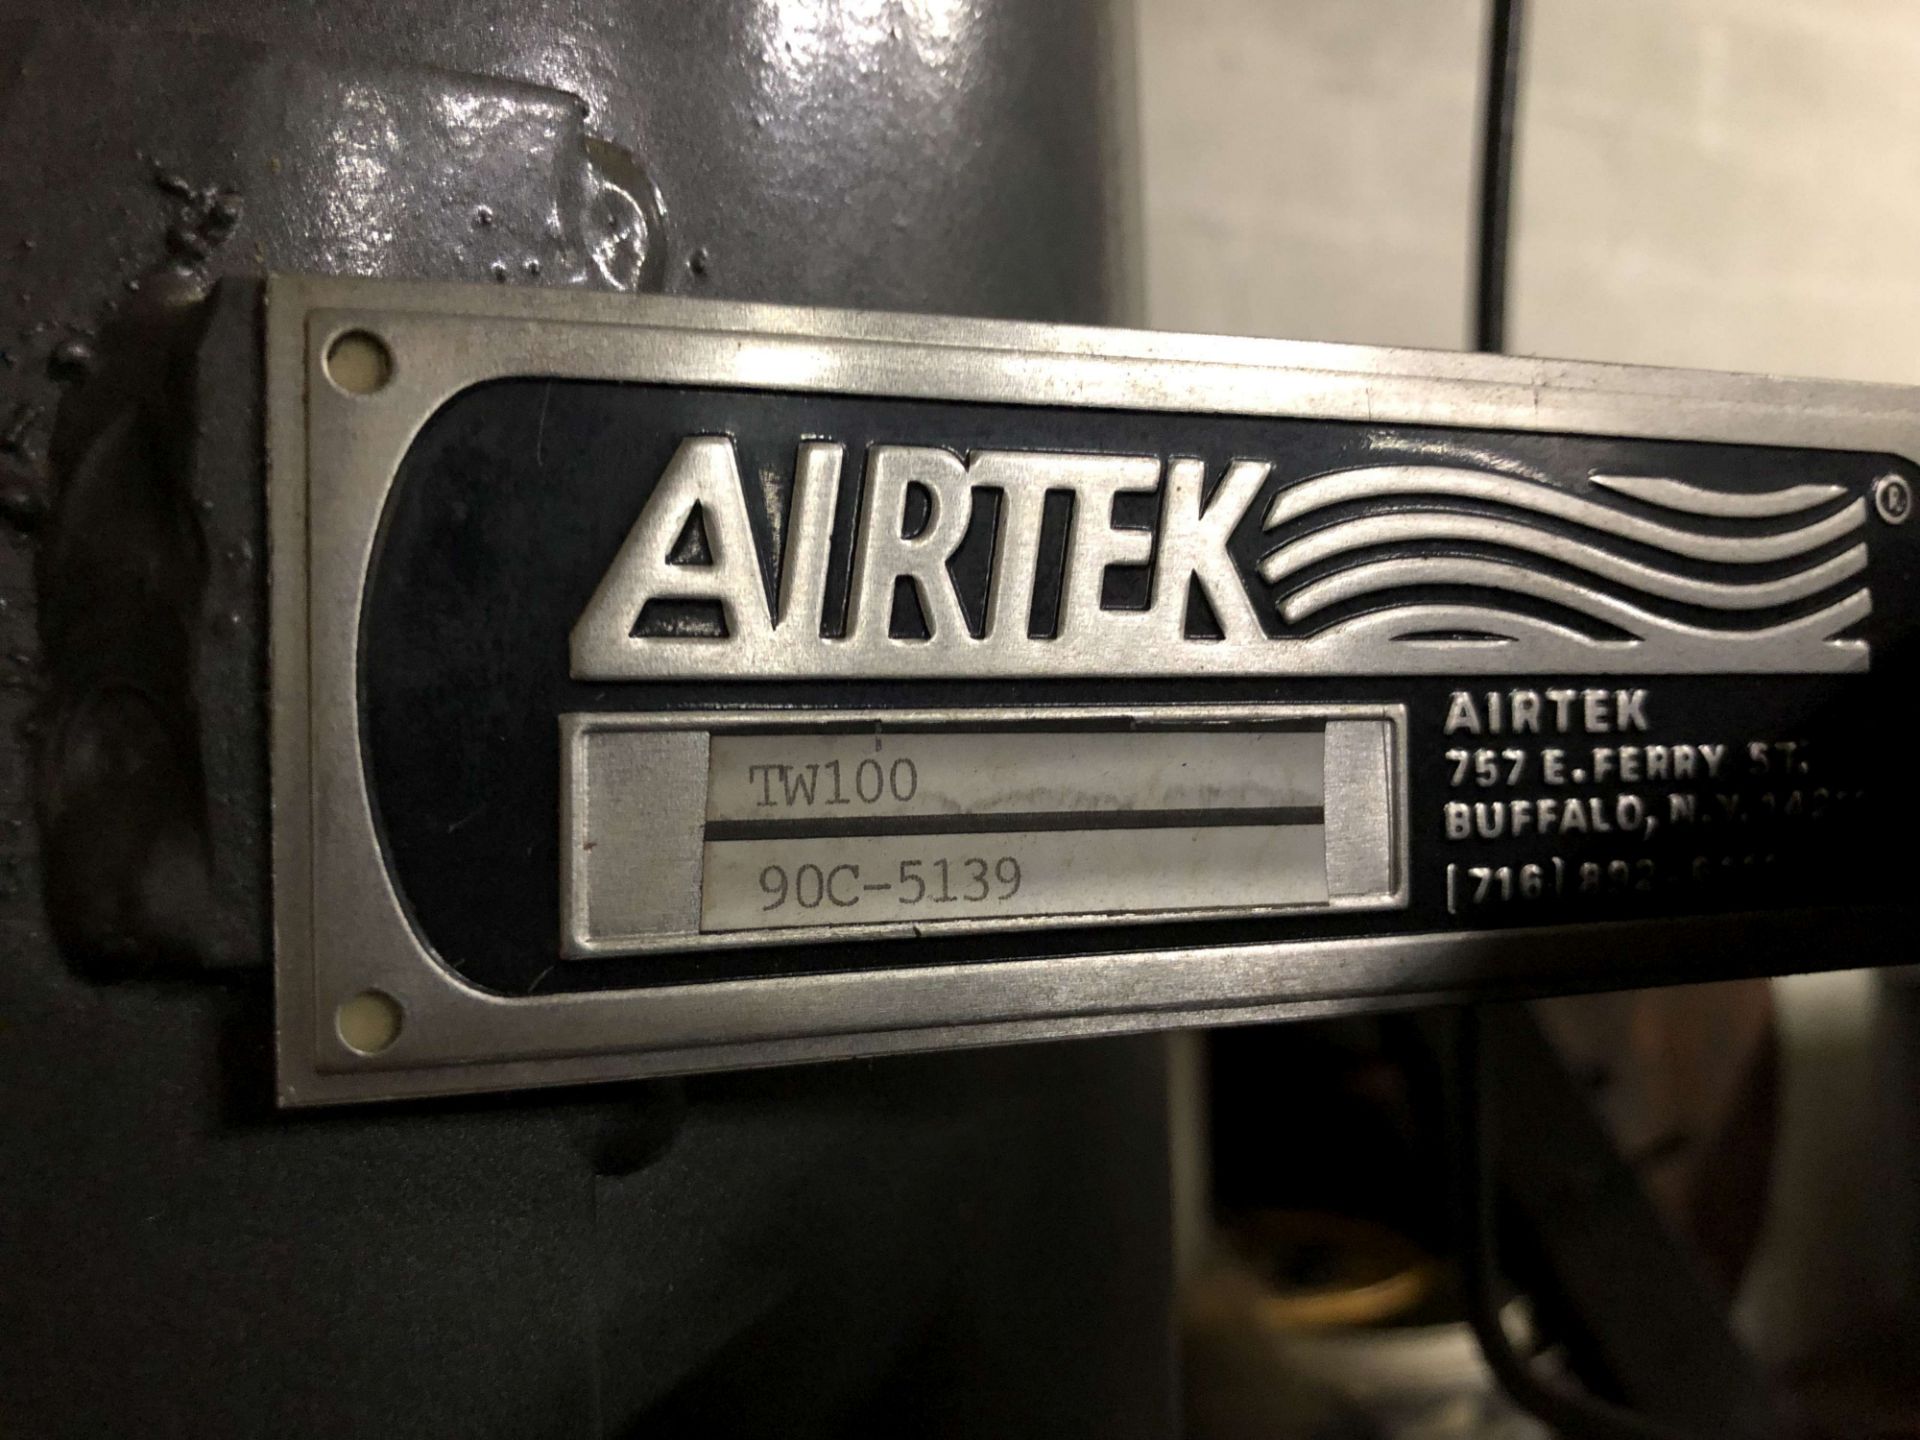 Airtek Desiccant Air Dryer, Model TW100, S/N 90C-5139 - Image 3 of 3